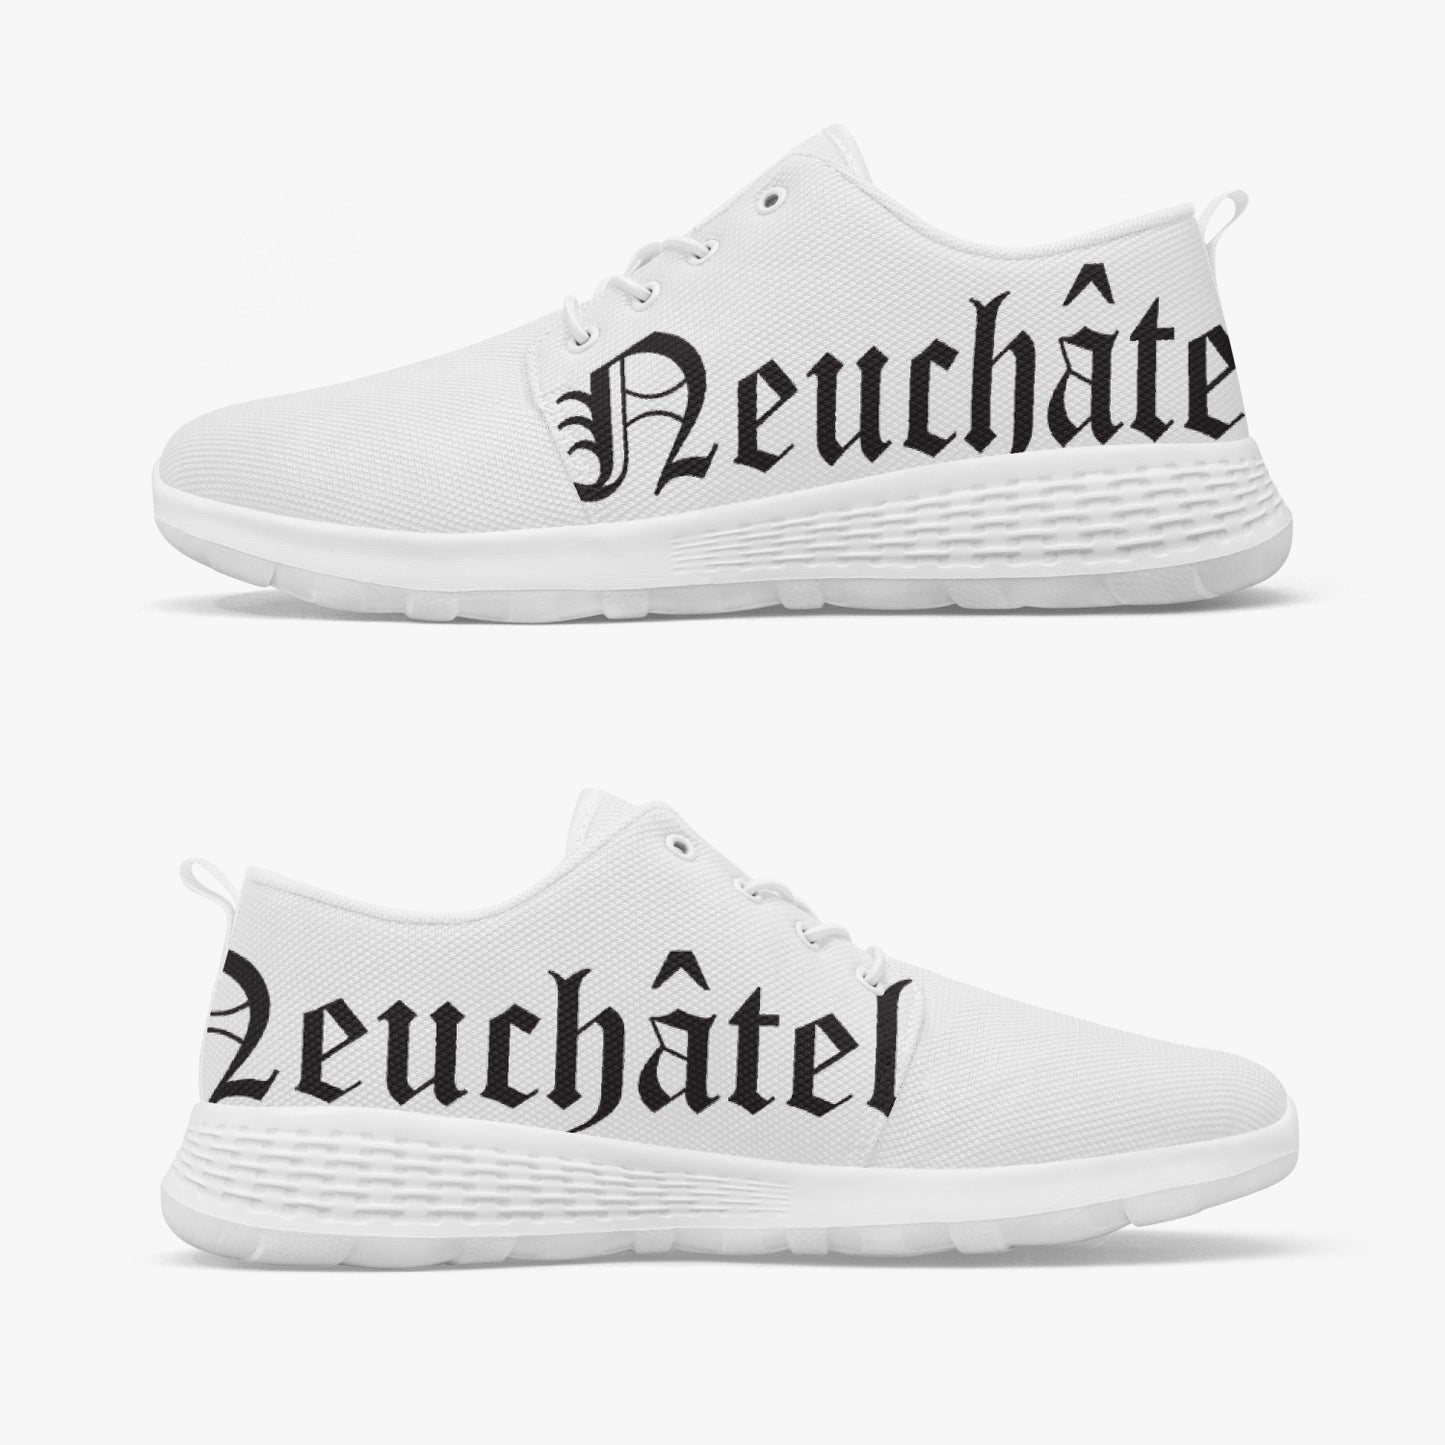 Chaussures de sport Neuchâtel